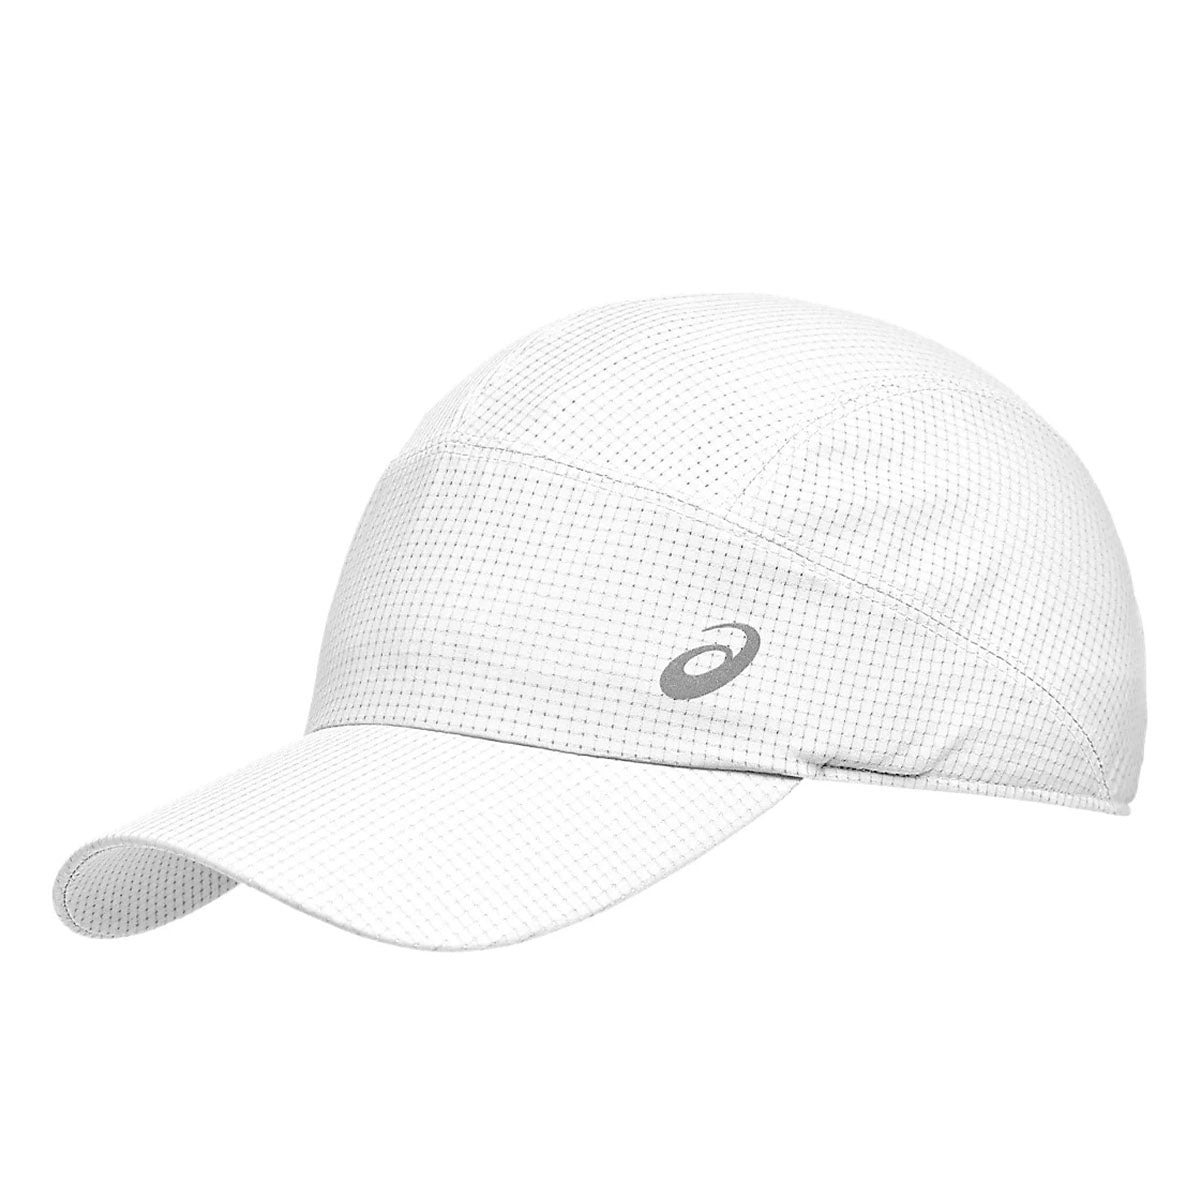 Asics  Lightweight Running Cap White כובע אסיקס